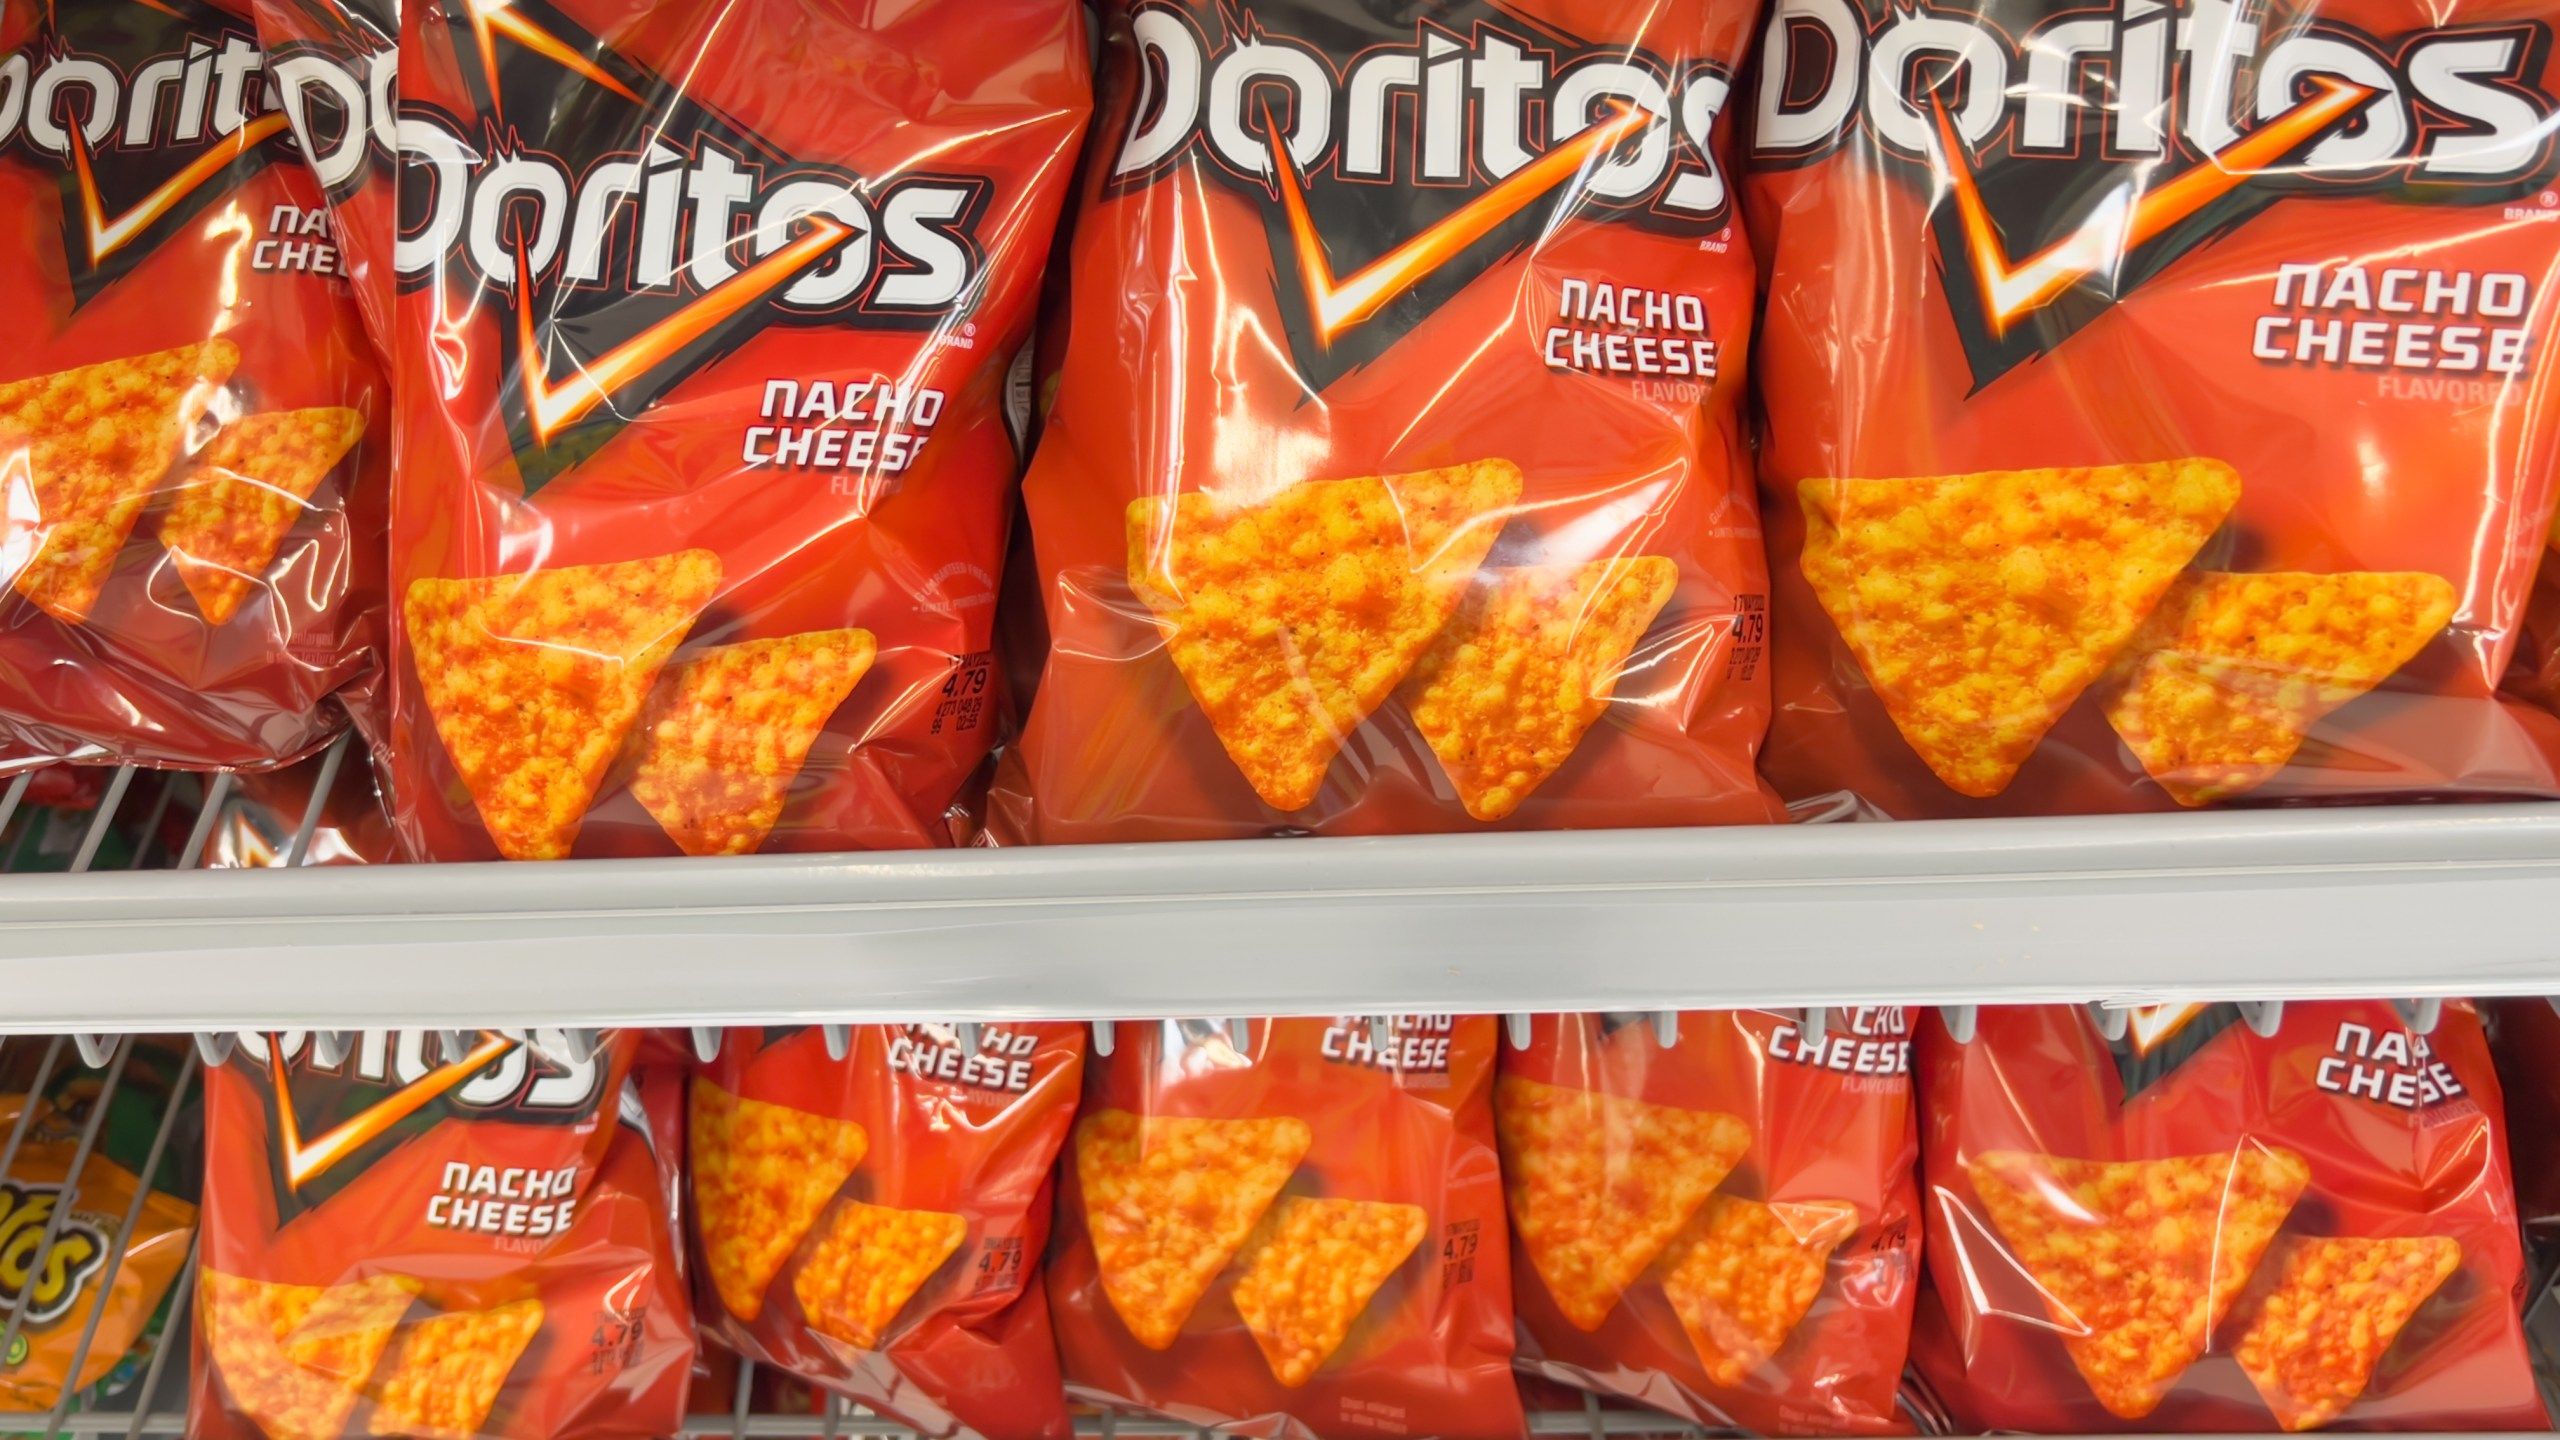 Doritos sold in PA recall for allergy concerns